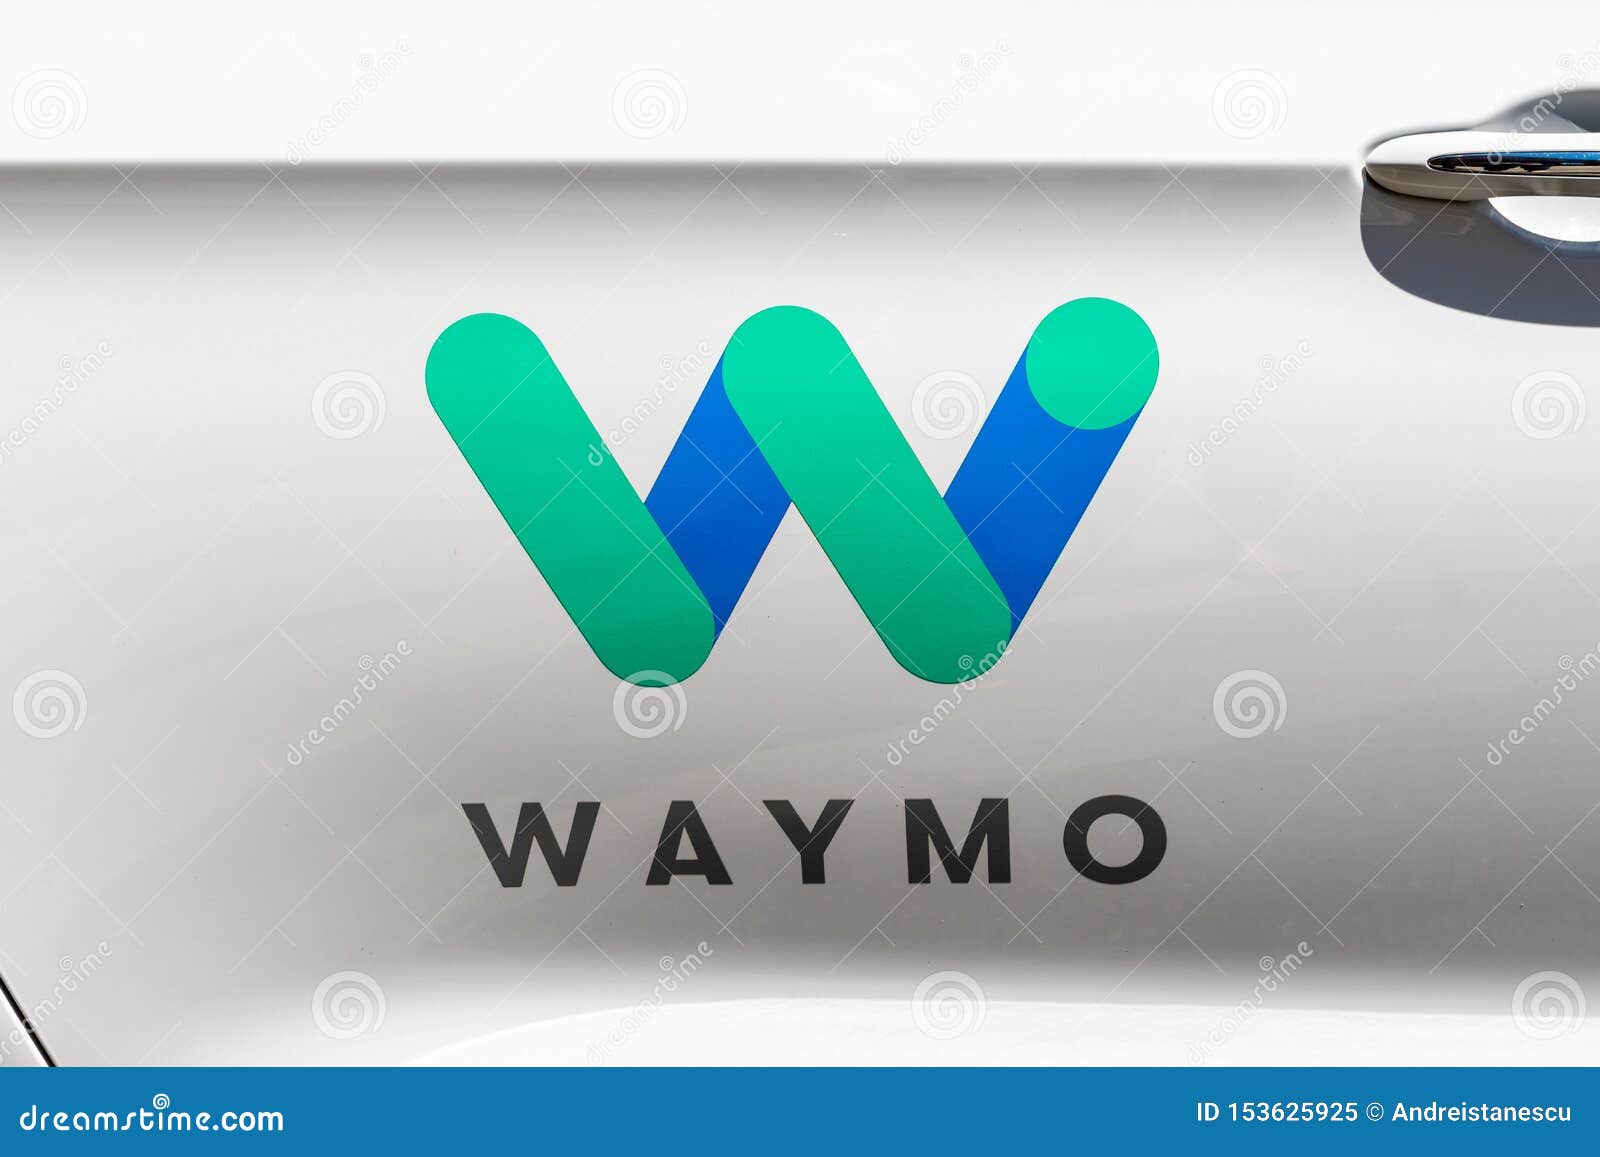 July 16 2019 Mountain View Ca Usa Close Up Of Waymo Logo On